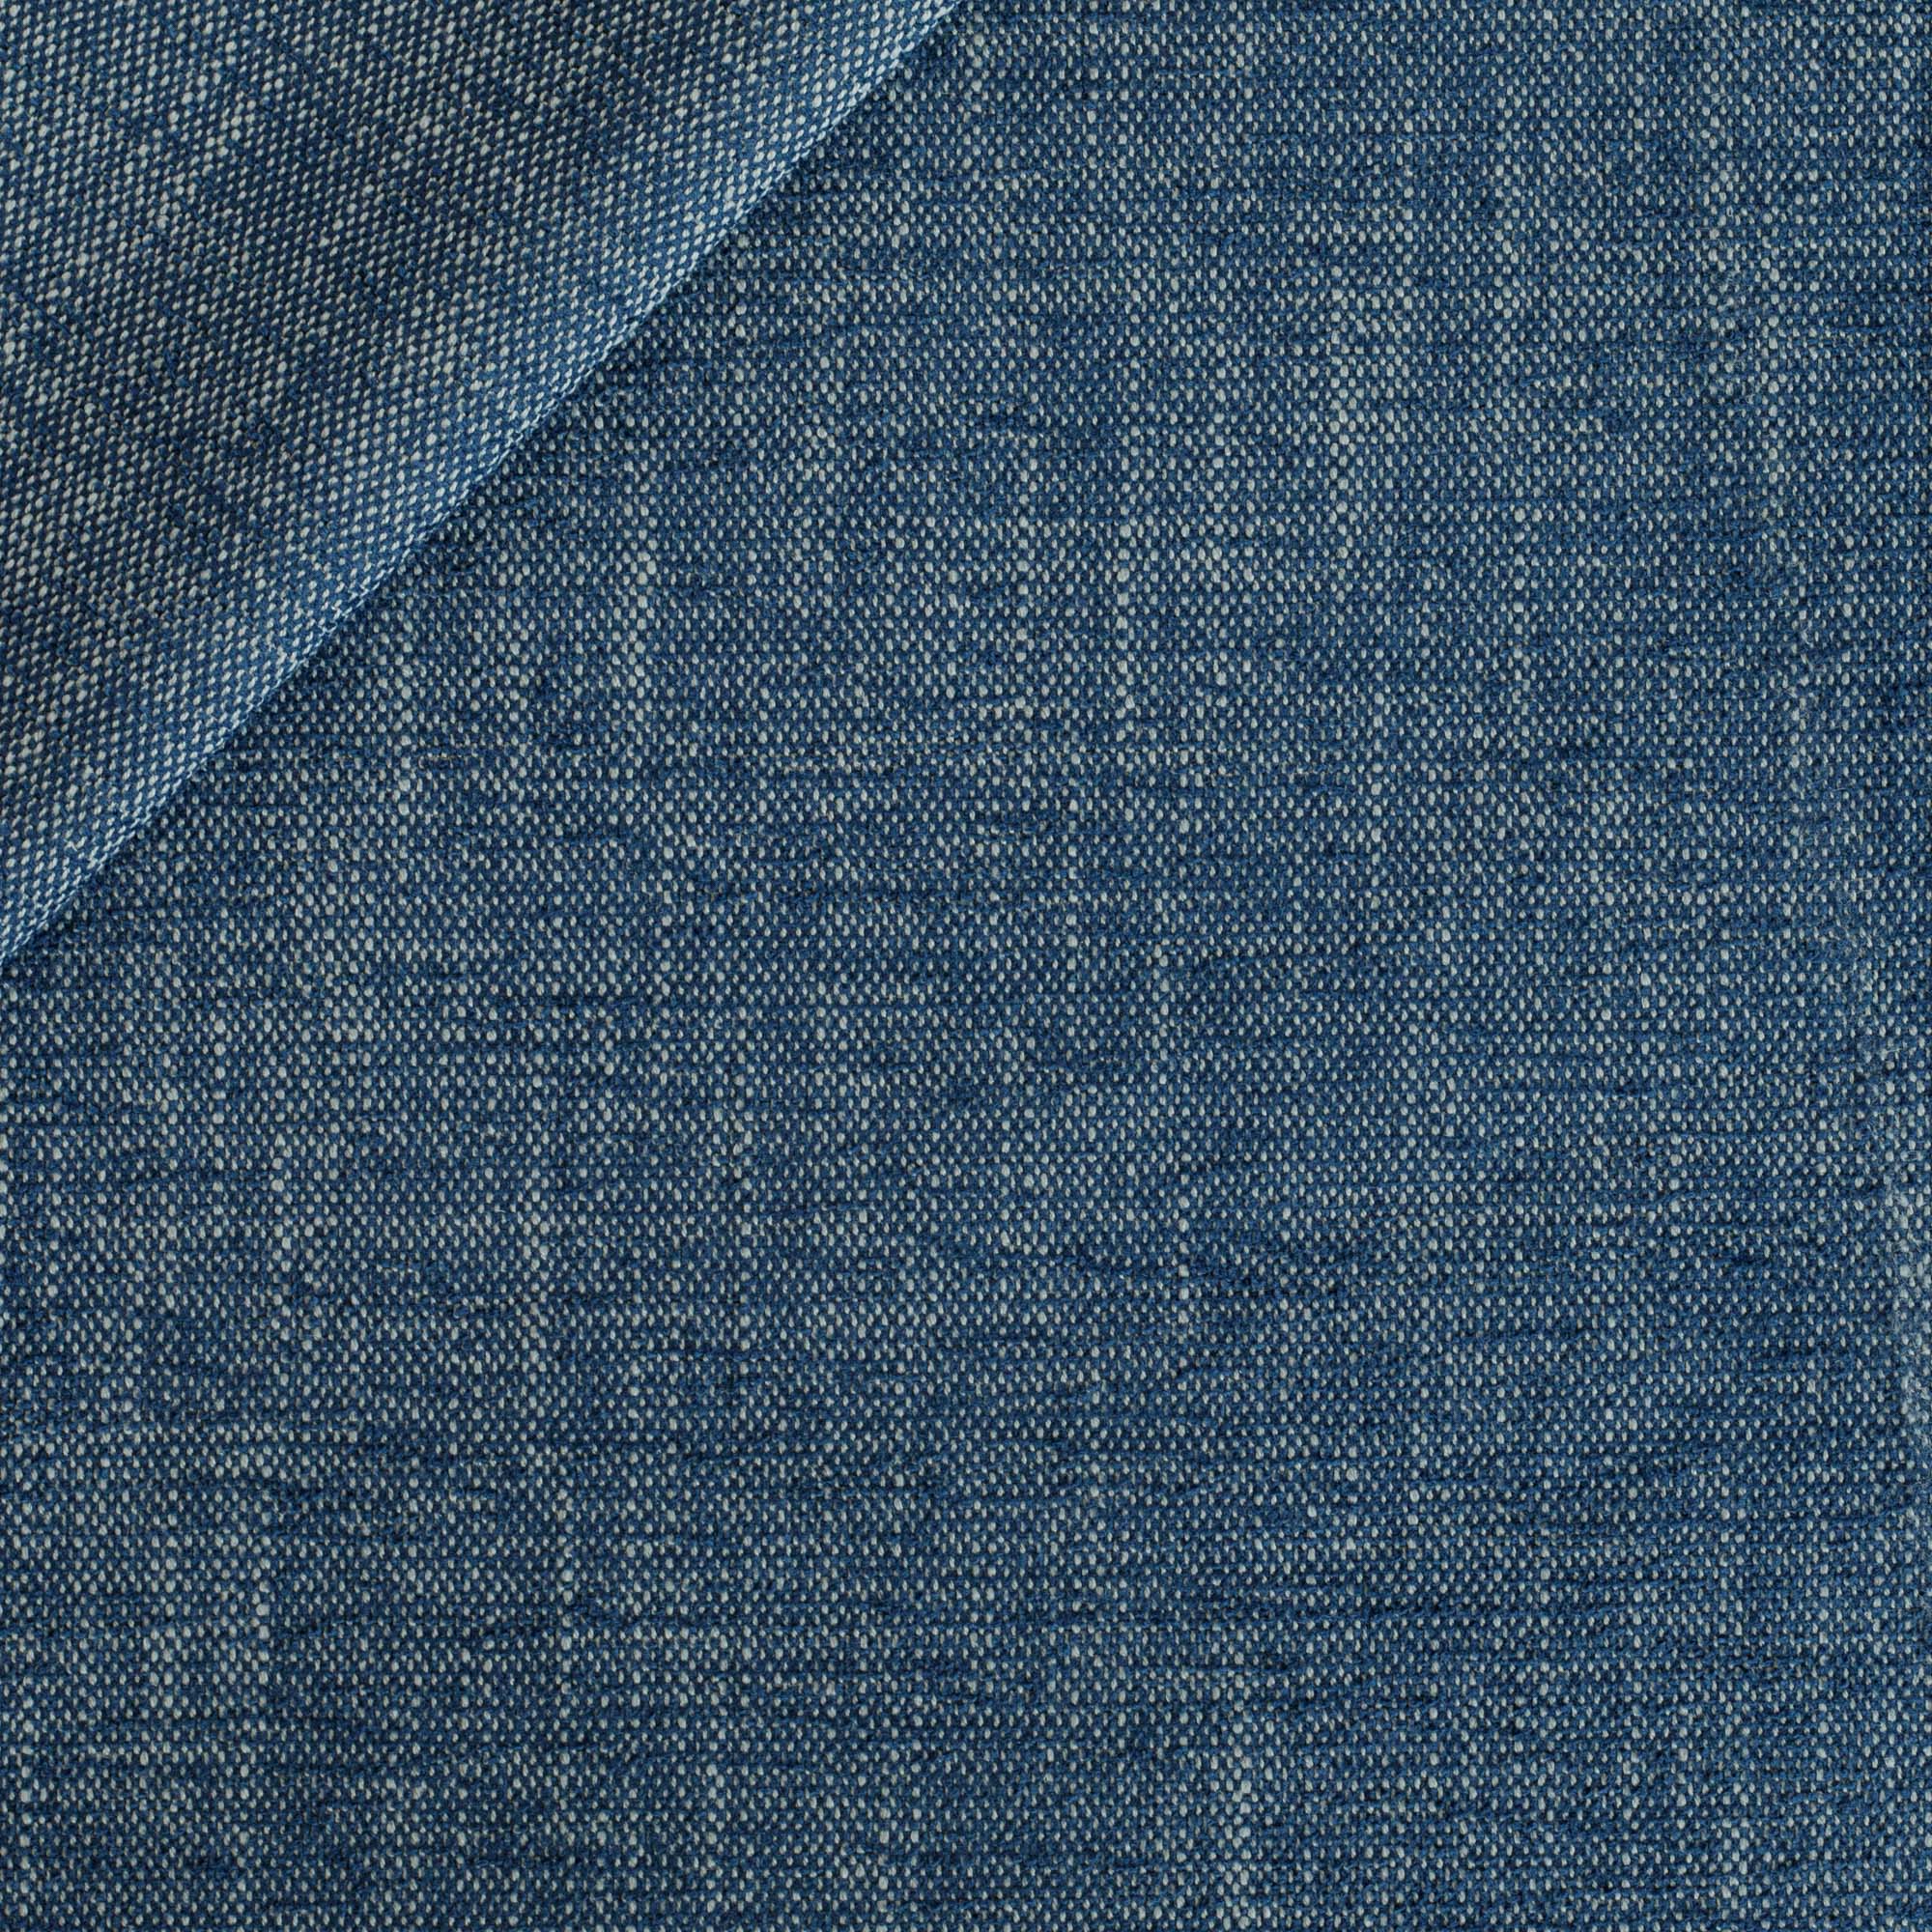 an indigo blue chenille upholstery fabric